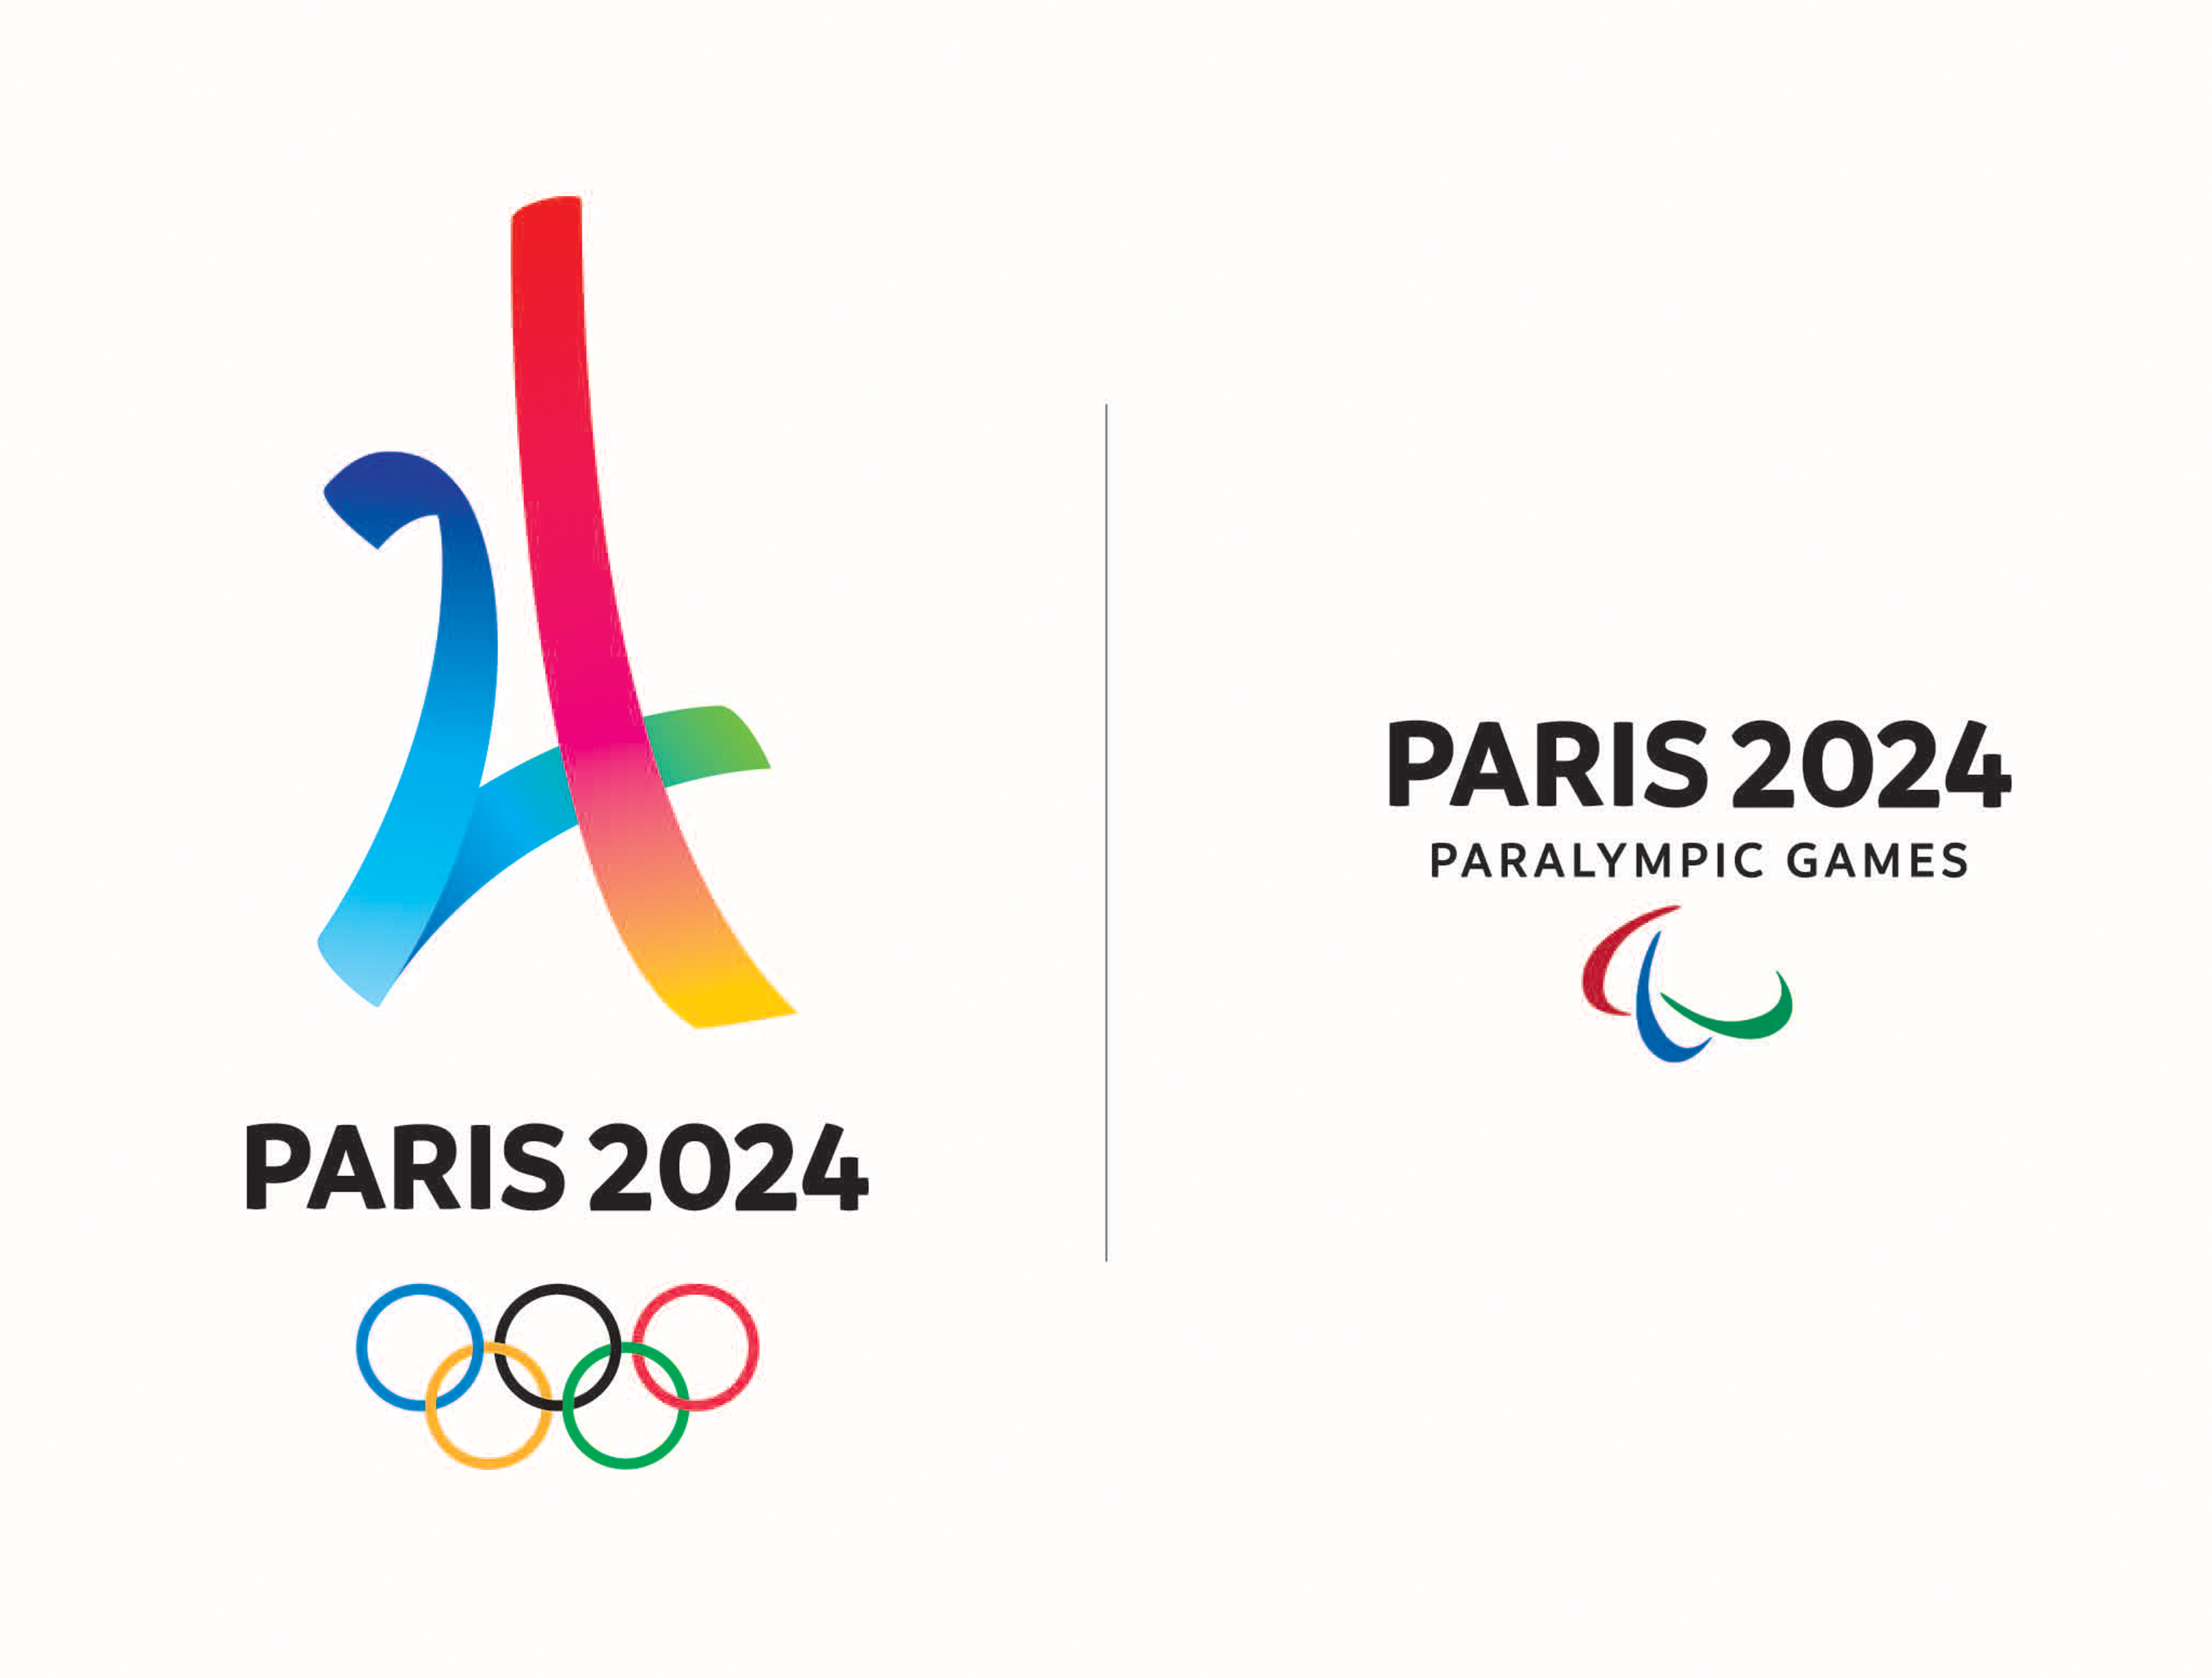 XXXIII Olympiad in 2024 - Summer Olympics in Paris - Paris with Scott